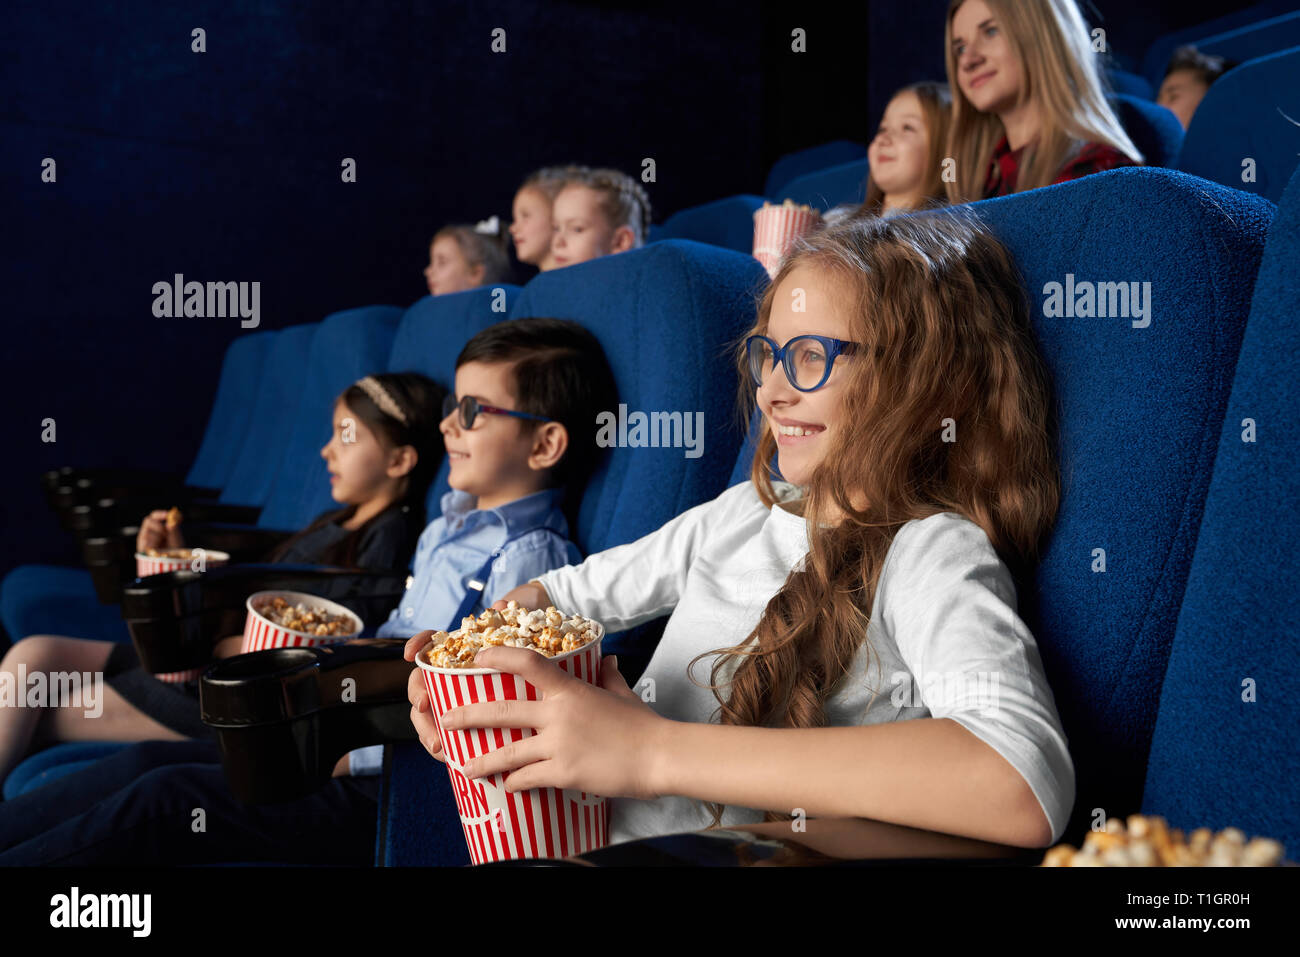 Happy, joyful kids sitting in dark blue, comfortable chairs in modern cinema theatre, watching movie or cartoon. Children enjoying film, smiling, holding buckets with popcorn. Stock Photo